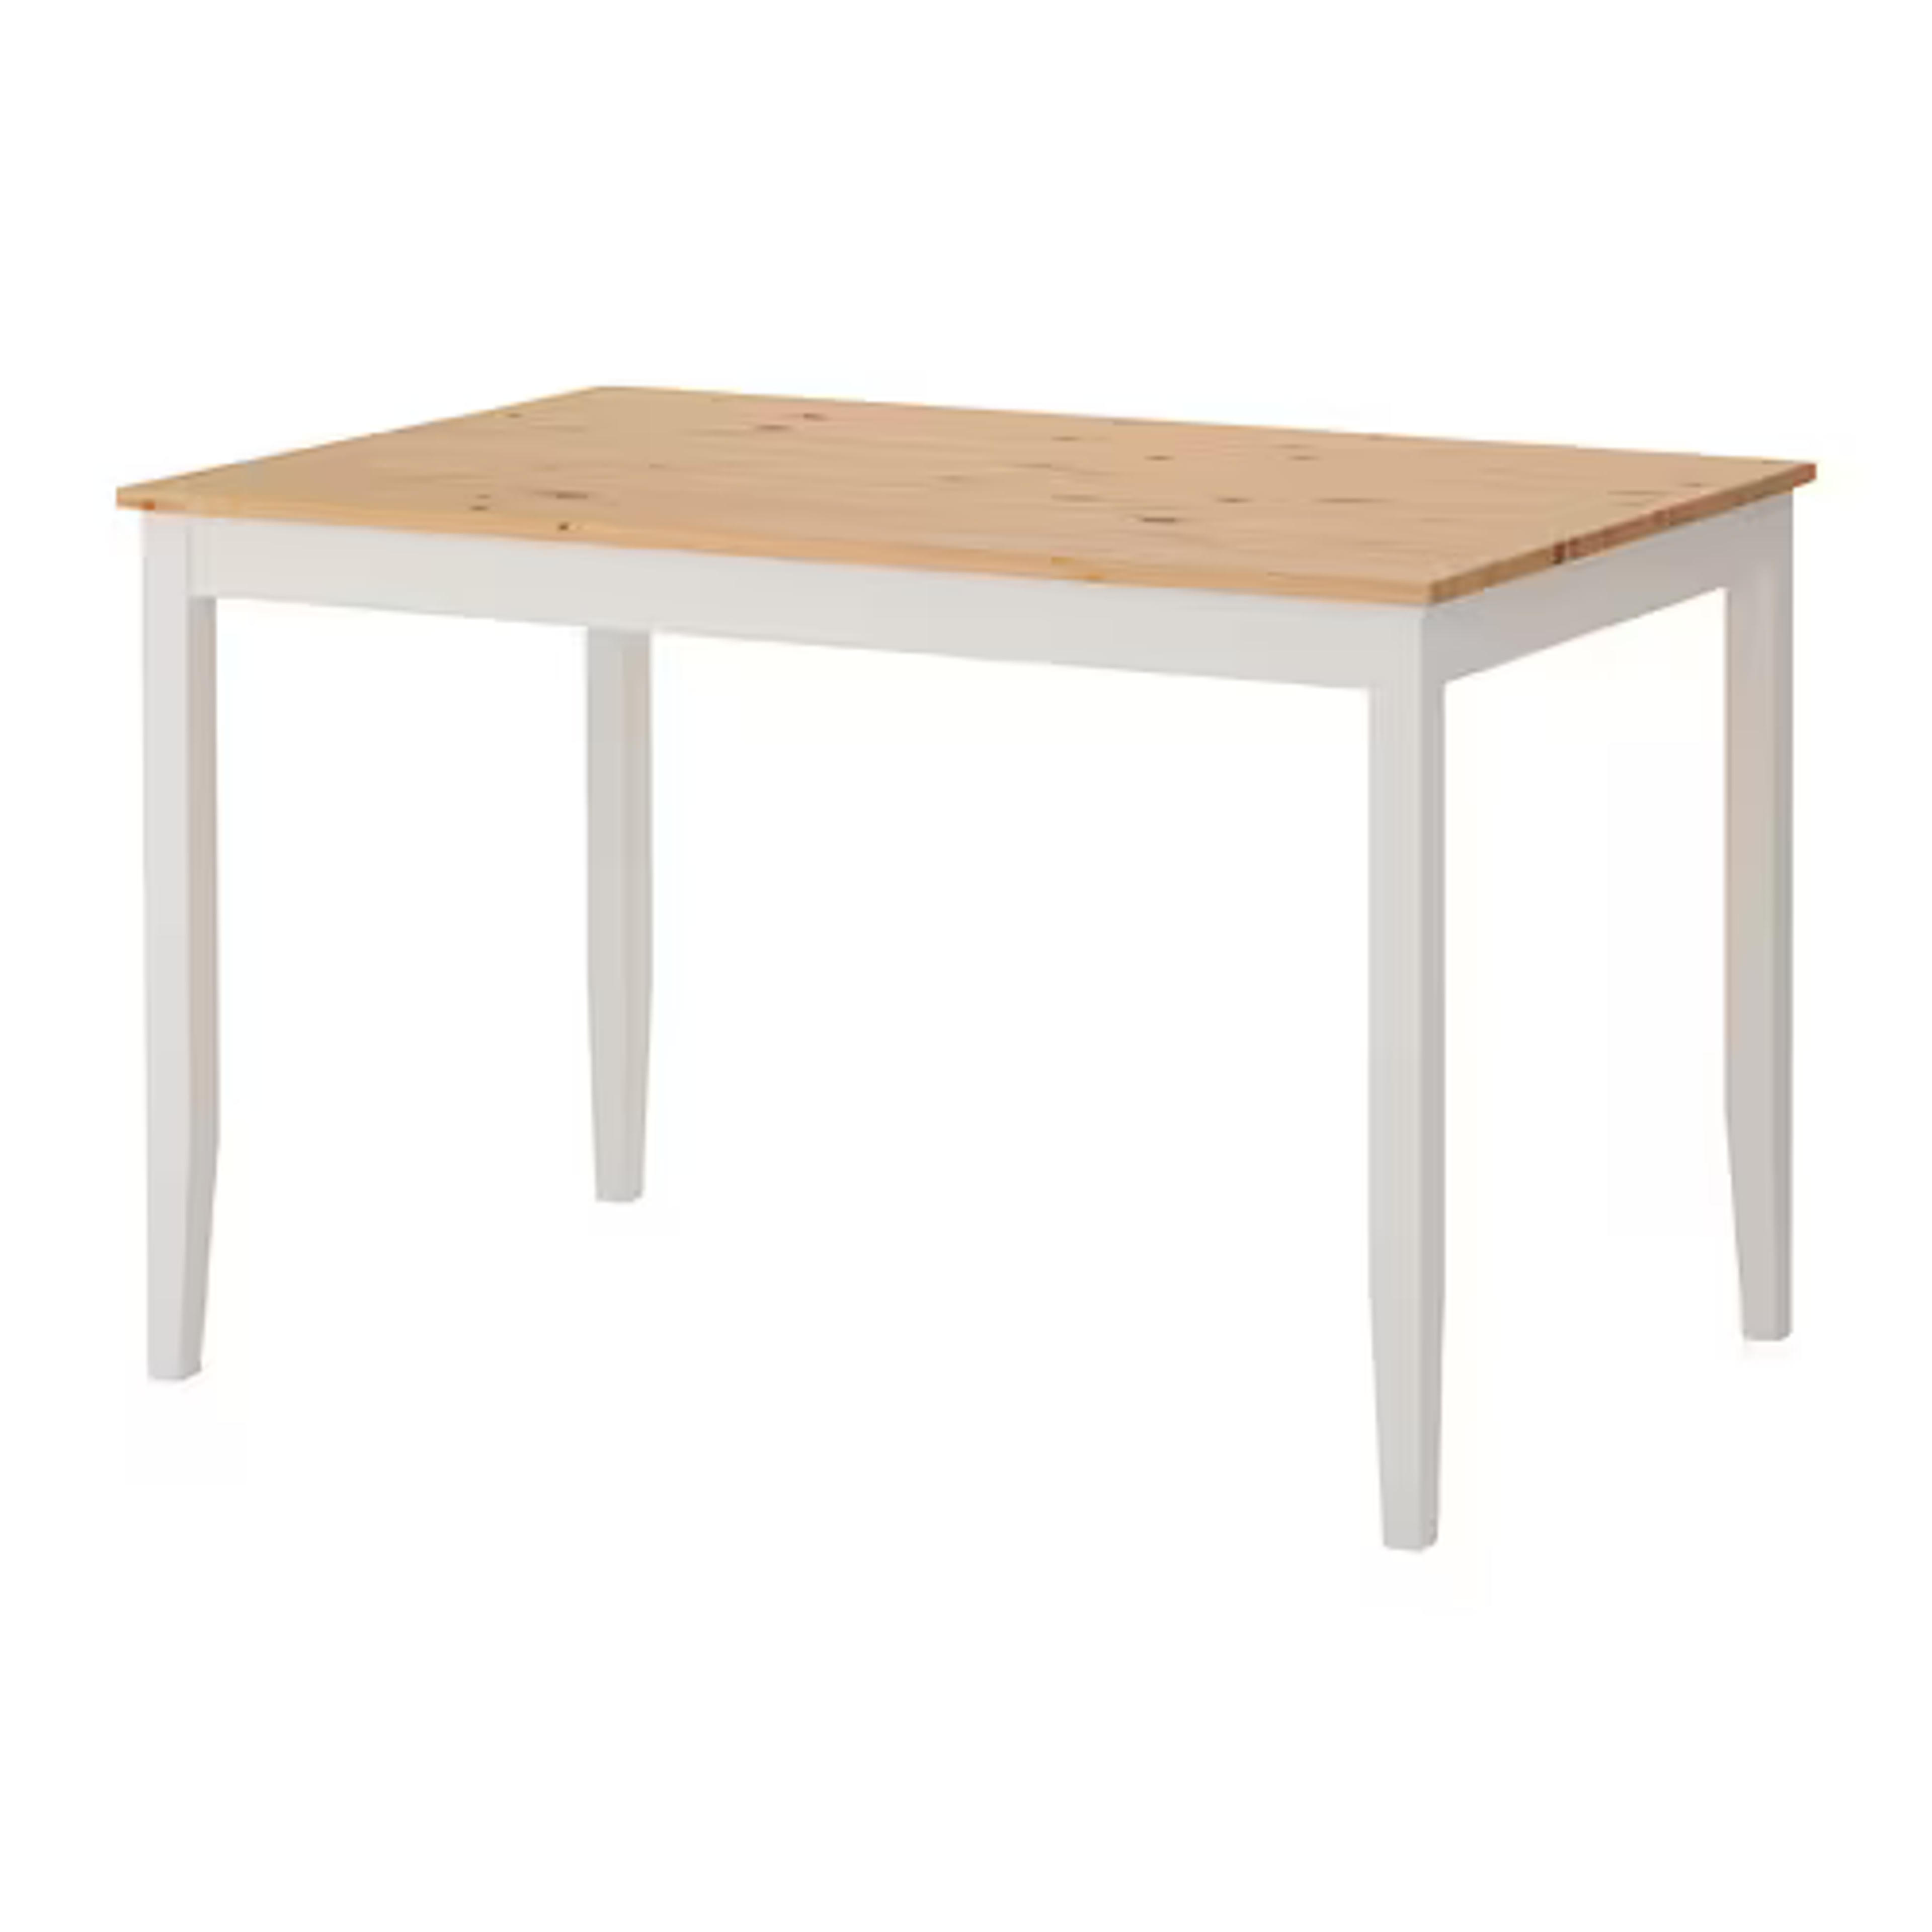 LERHAMN - table, light antique stain/white stain